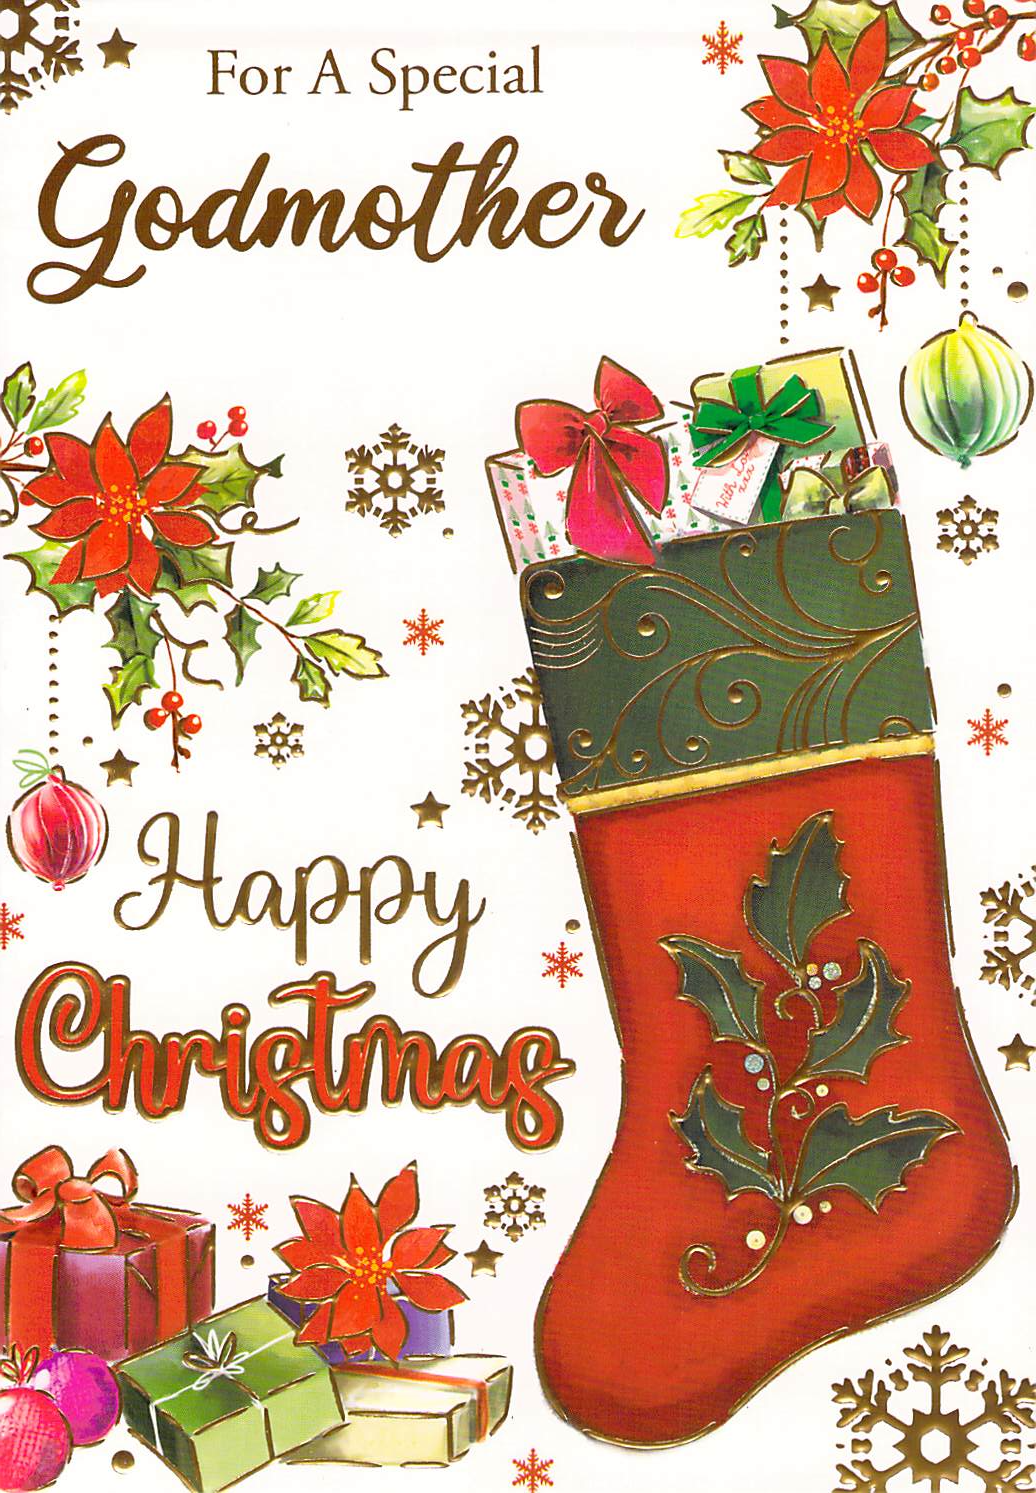 Godmother - Christmas - flowers - Greeting Card